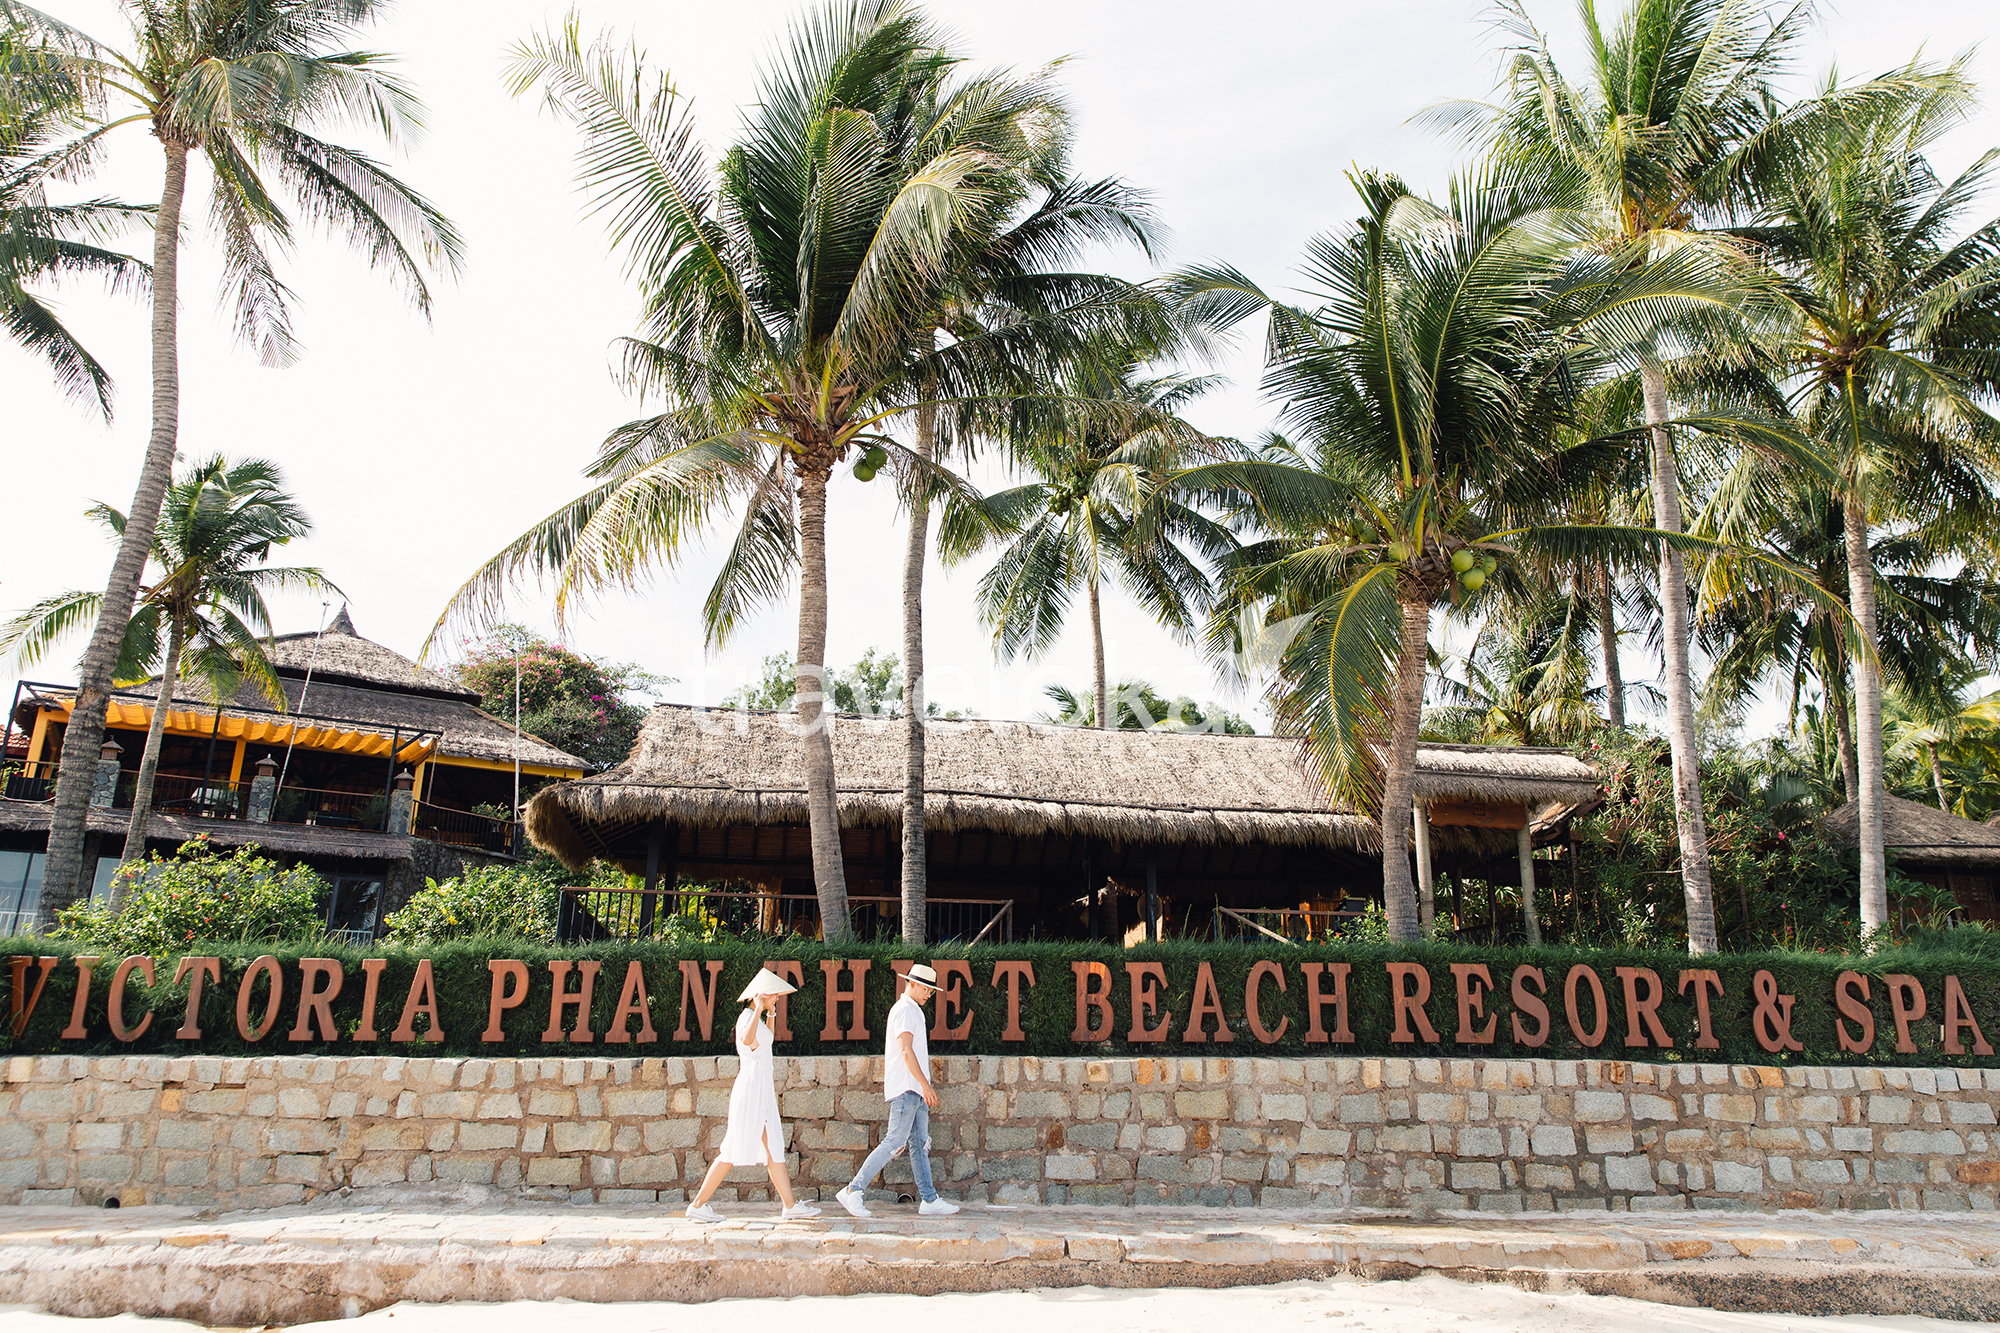 Cẩm nang du lịch Phan Thiết - Victoria Phan Thiet Beach Resort & Spa